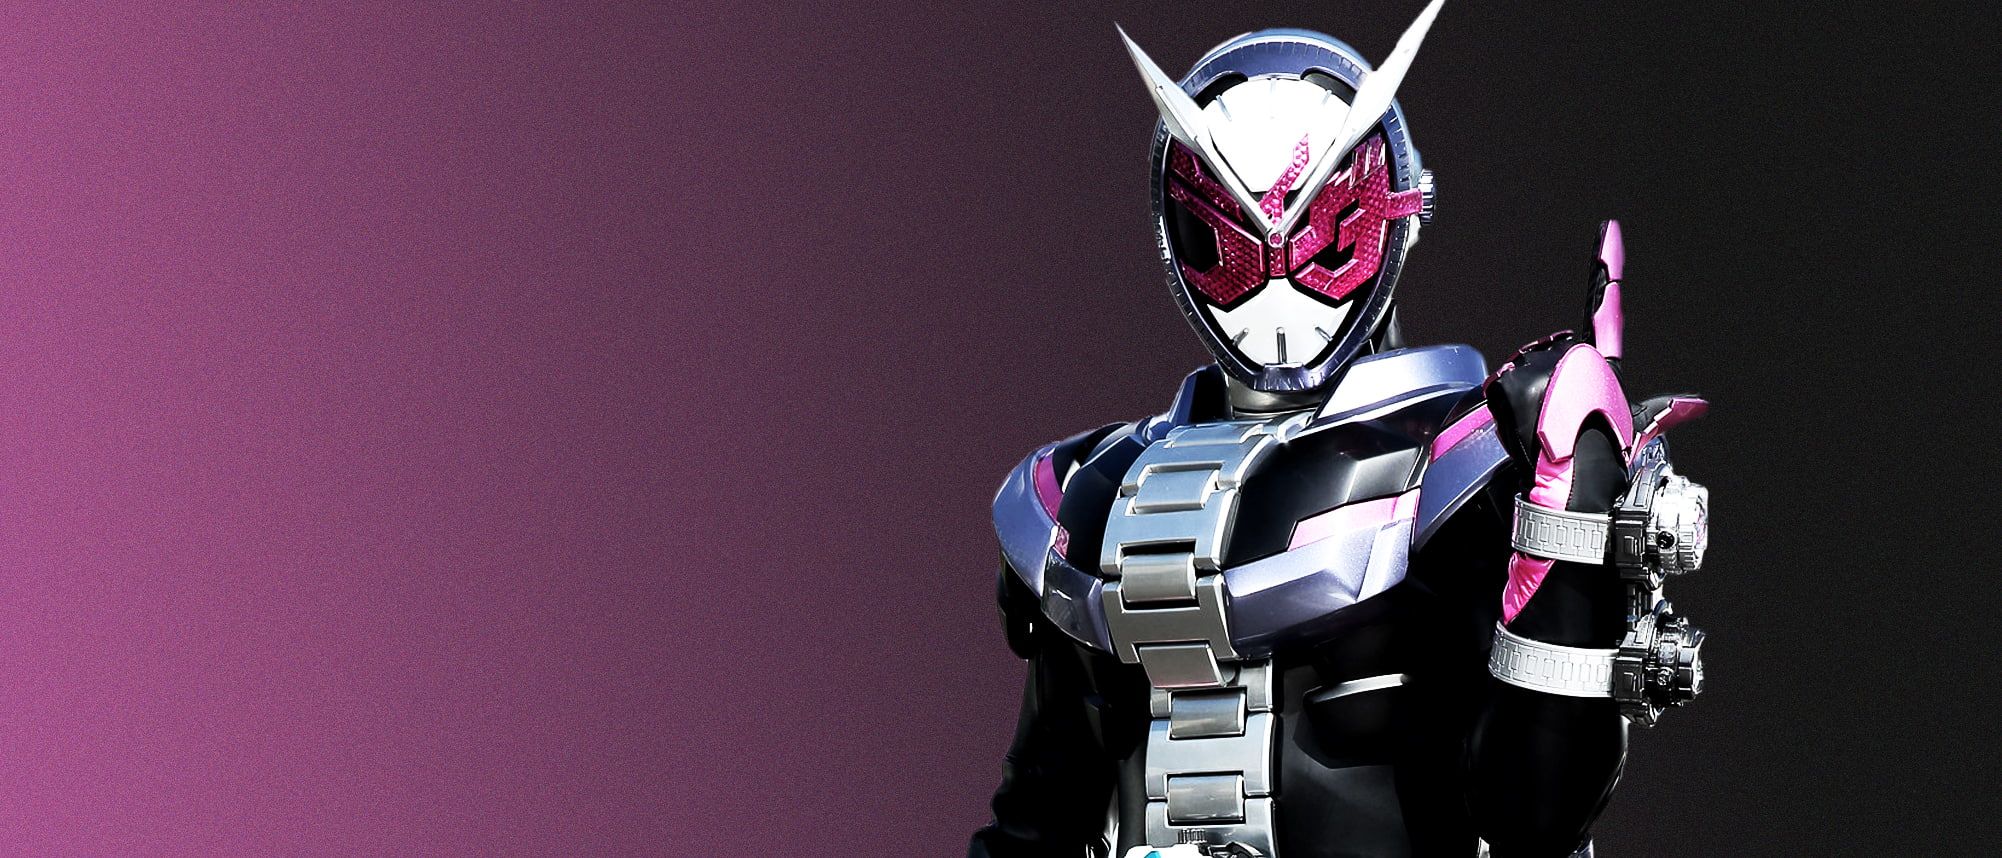 Kamen Rider HD wallpaper free download